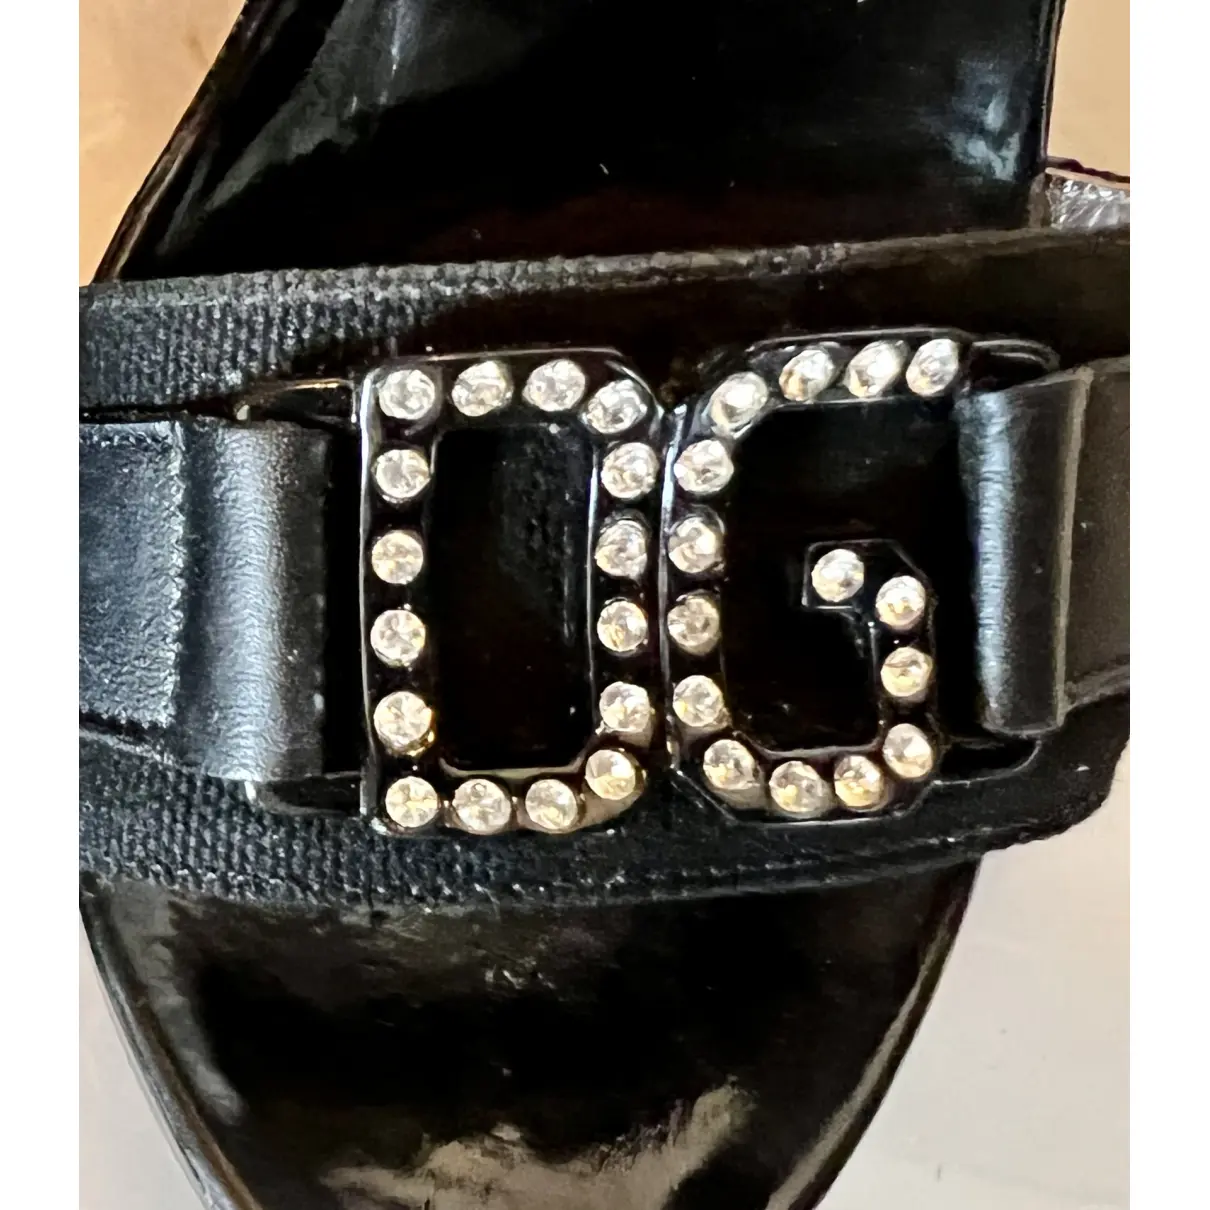 Patent leather sandals Dolce & Gabbana